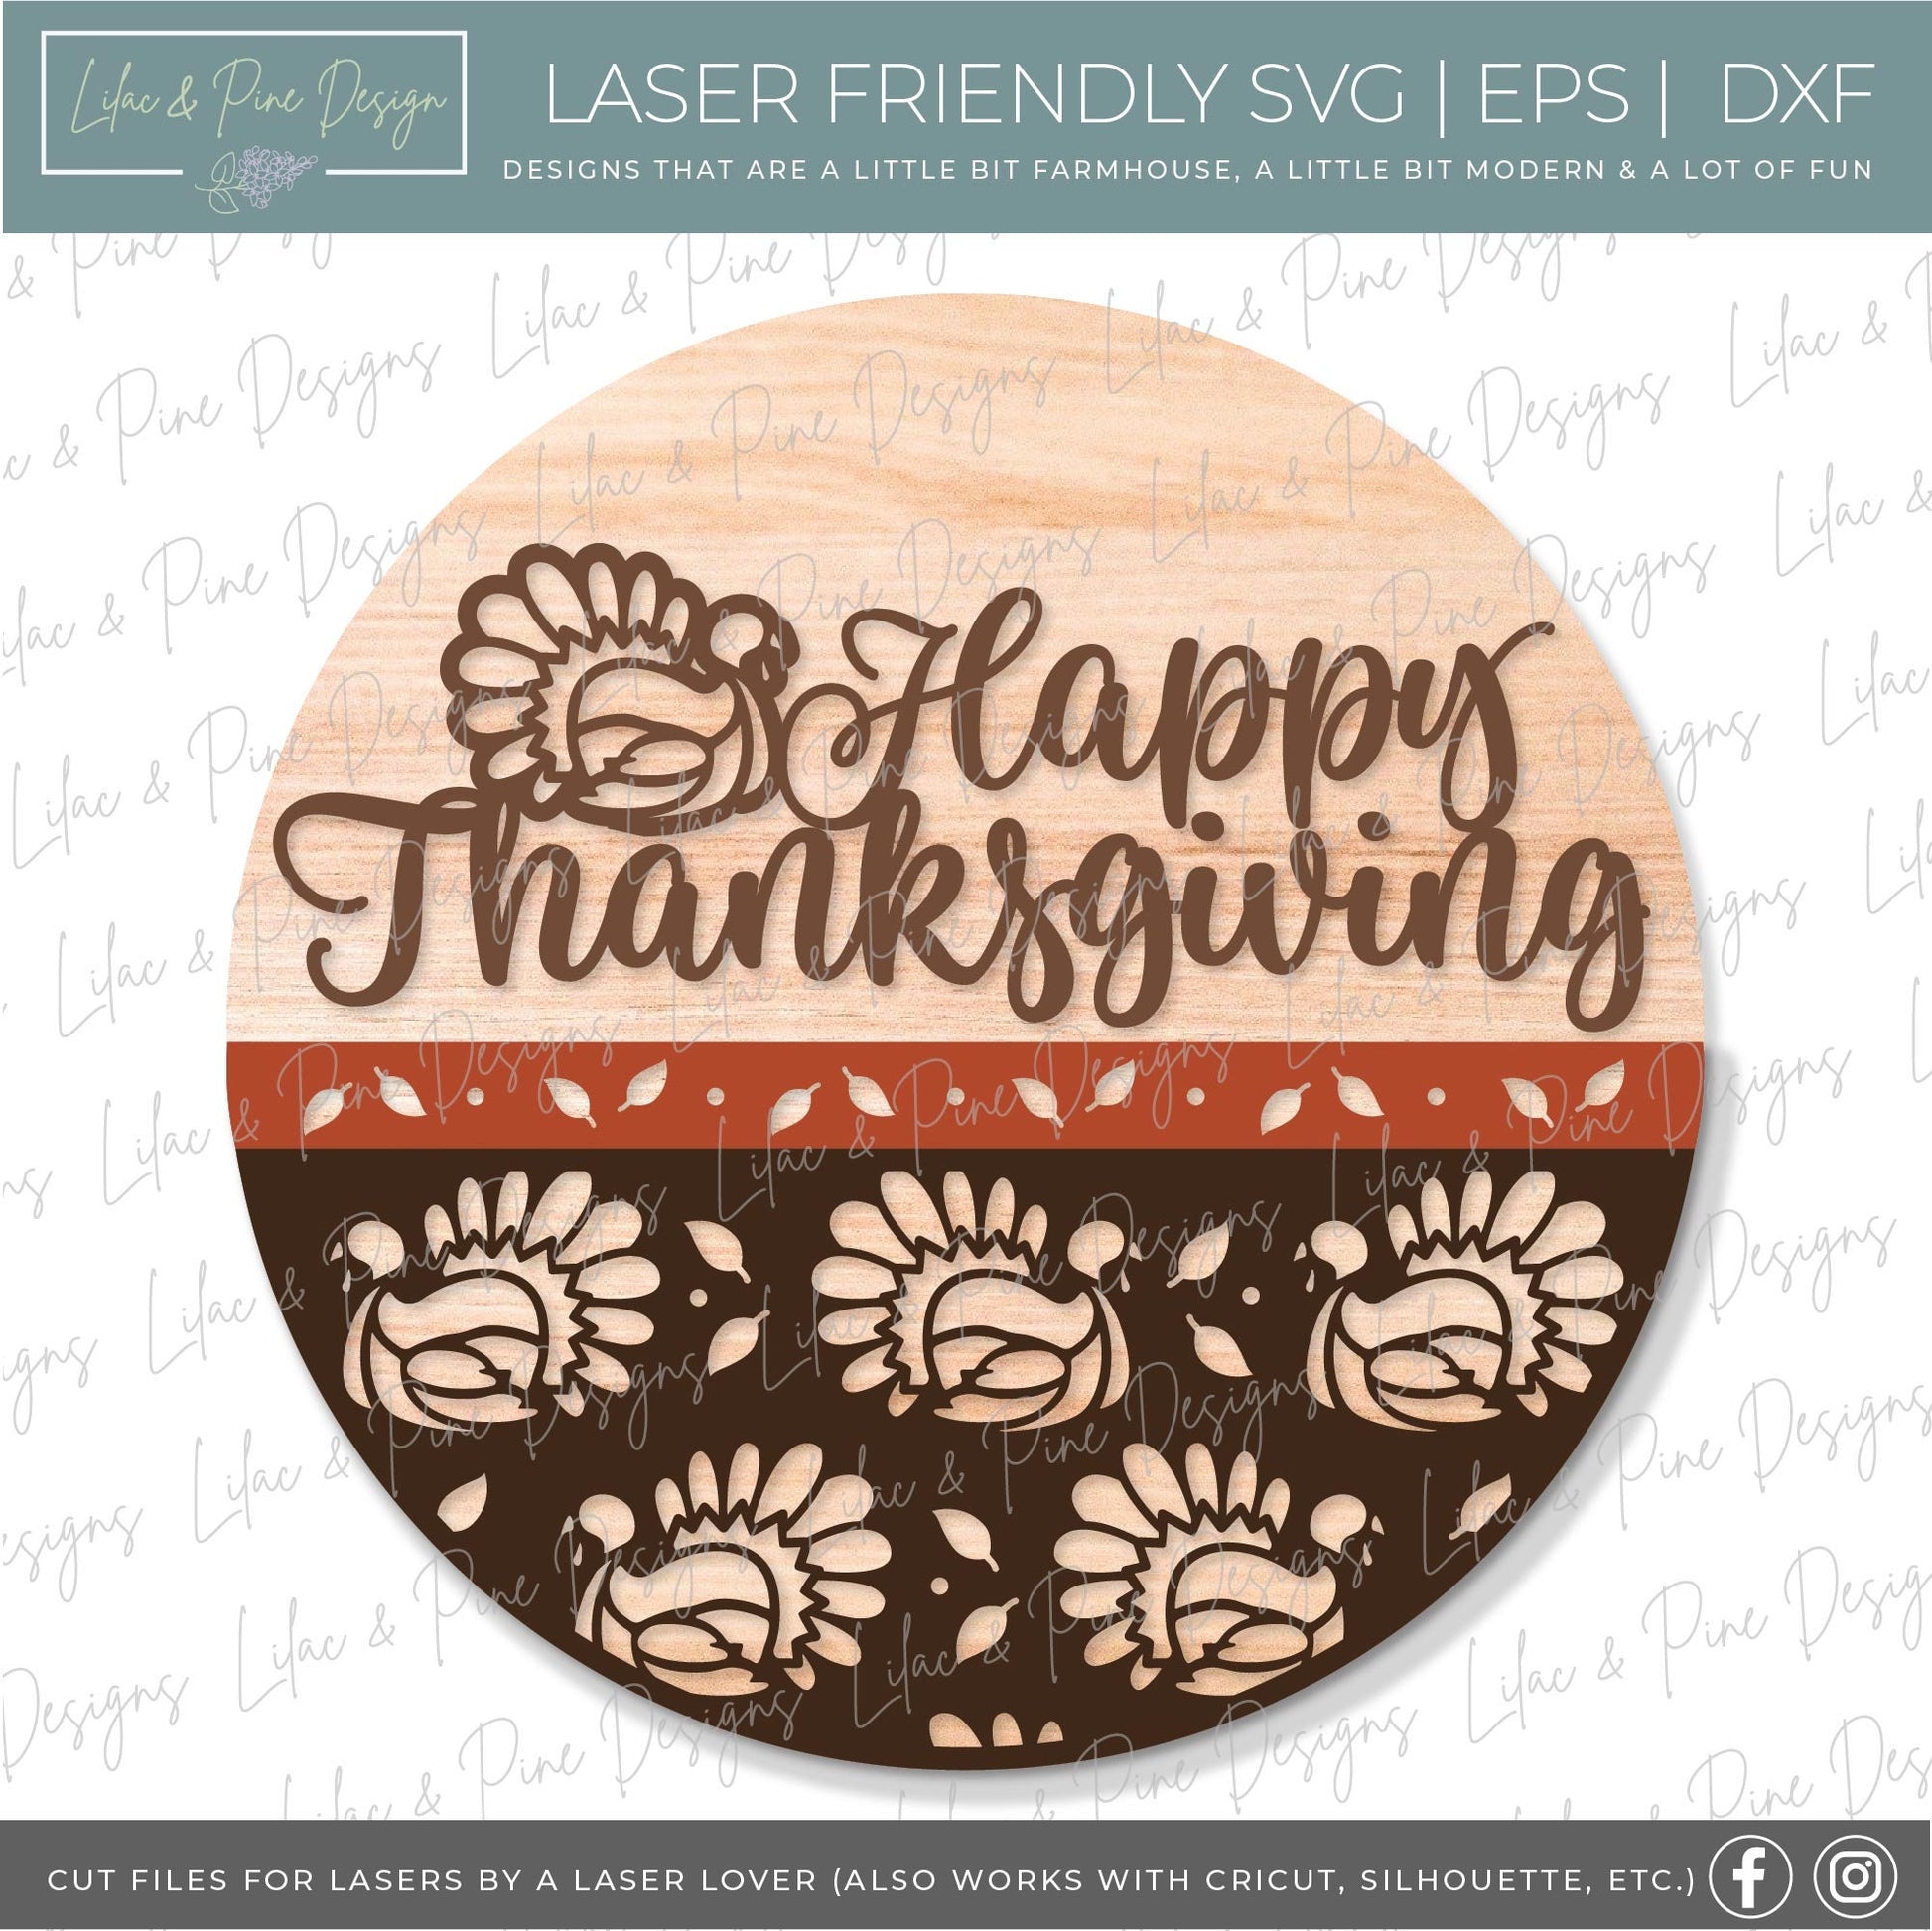 Thanksgiving door hanger SVG, Happy Thanksgiving sign SVG, Turkey welcome sign svg, Thanksgiving porch decor, Glowforge SVG, laser cut file